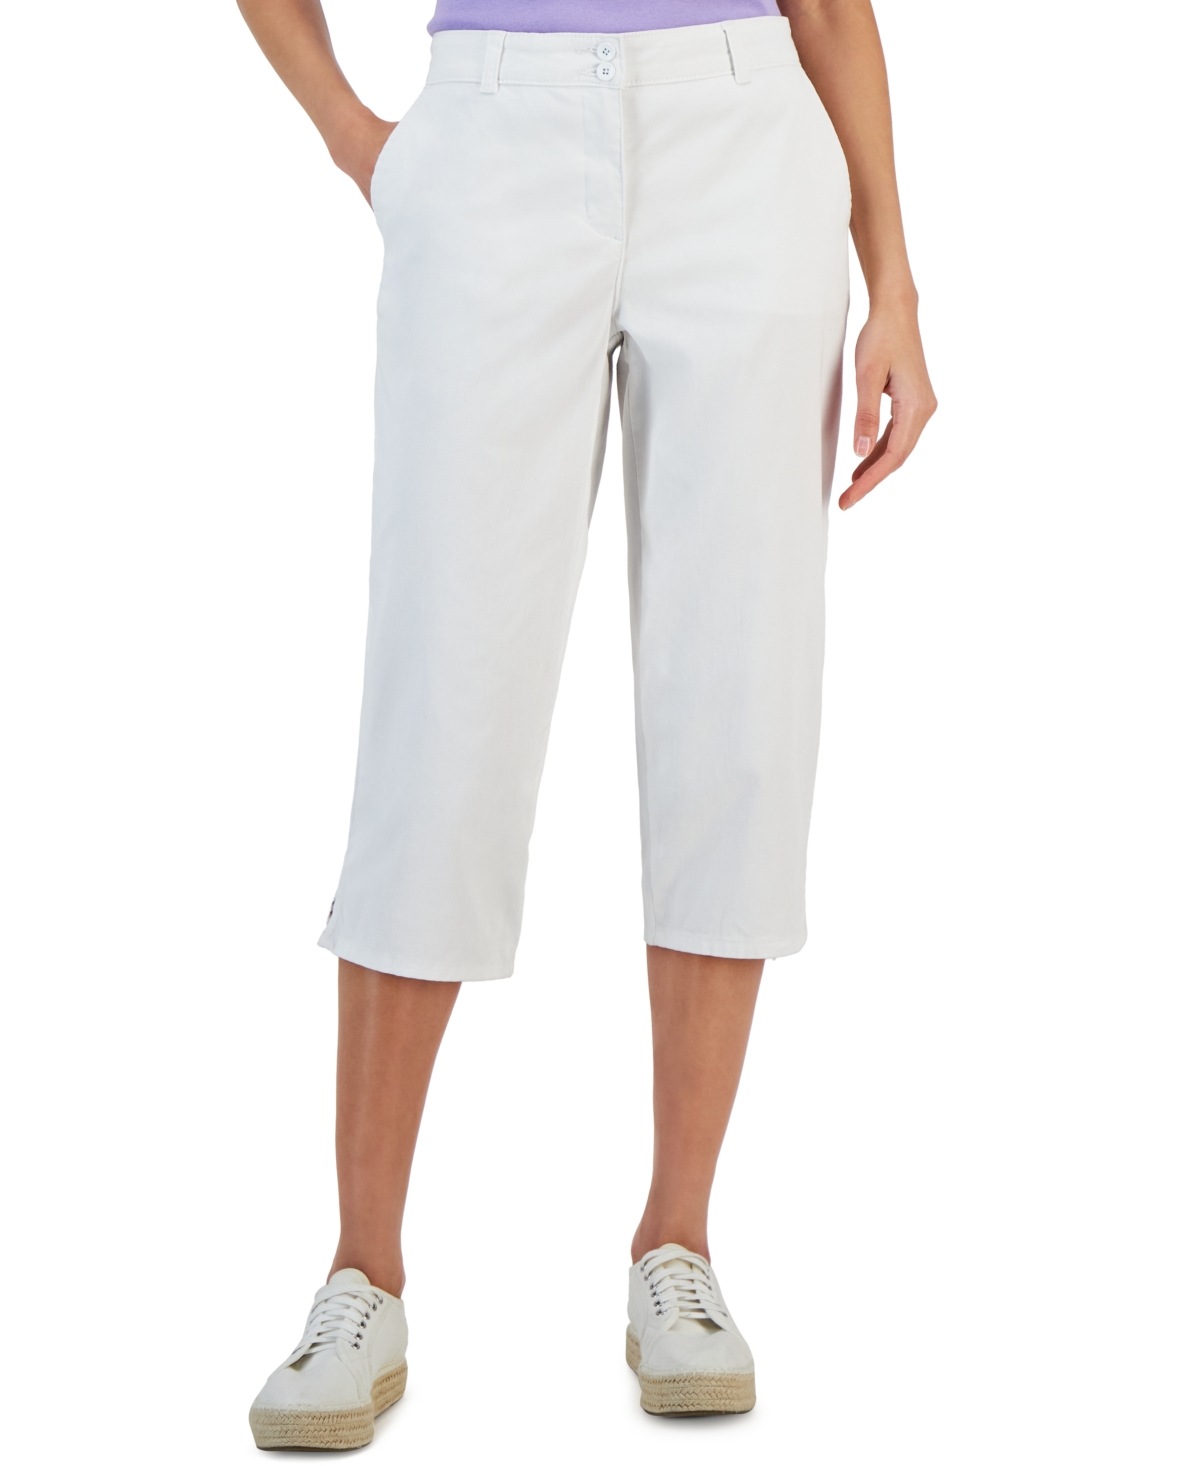 Petite Comfort Waist High-Rise Capri Pants, Created for Macy's - Bright White